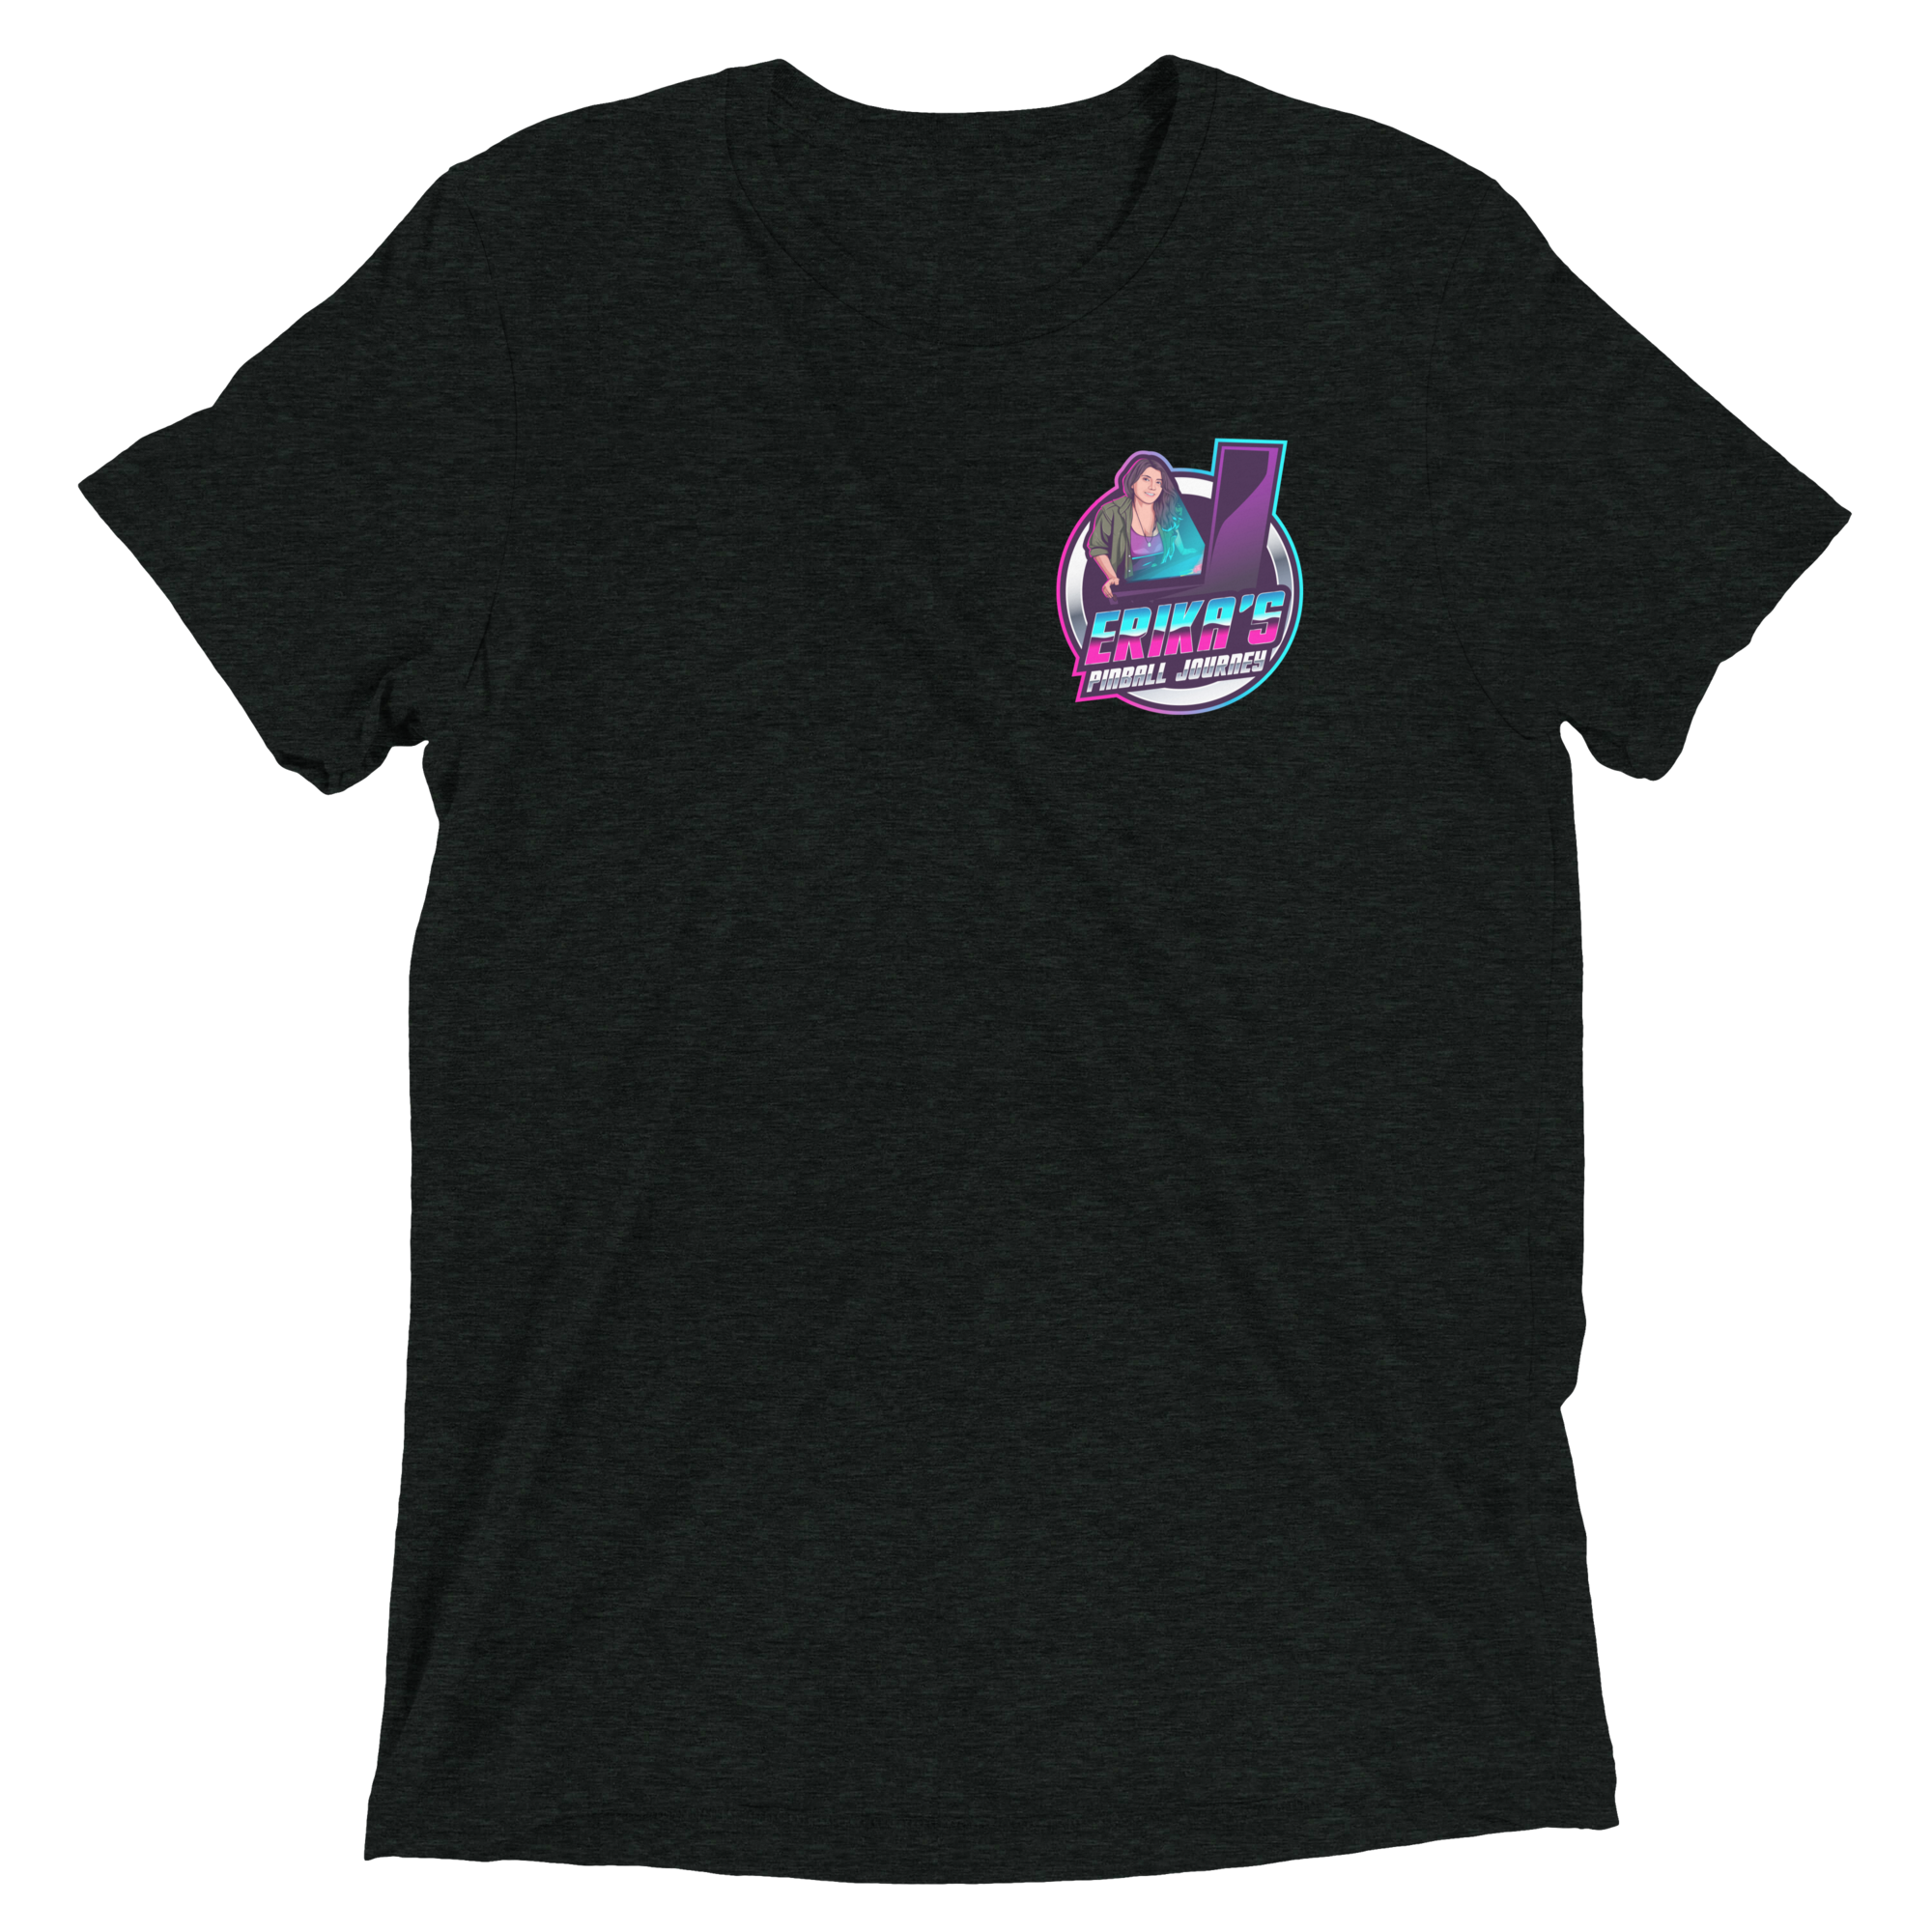 Erika's Pinball Journey - Premium Tri-blend Shirt